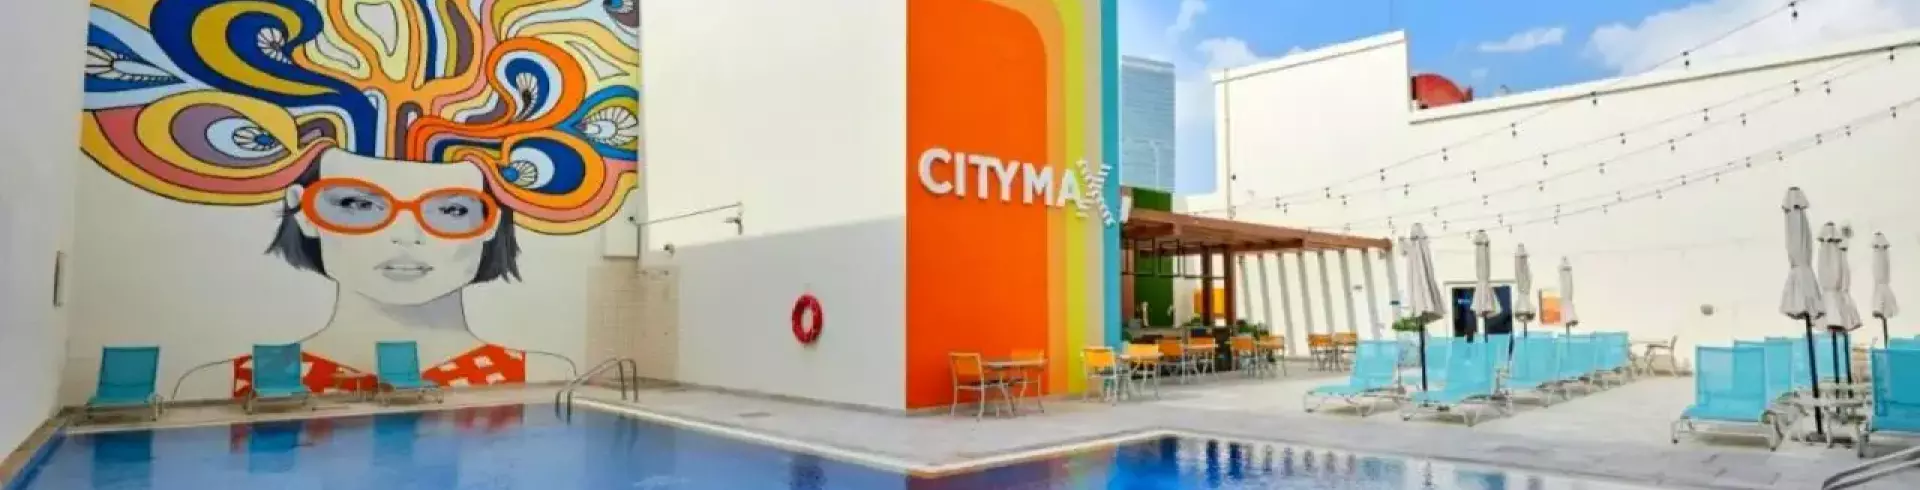 Citymax Business Bay